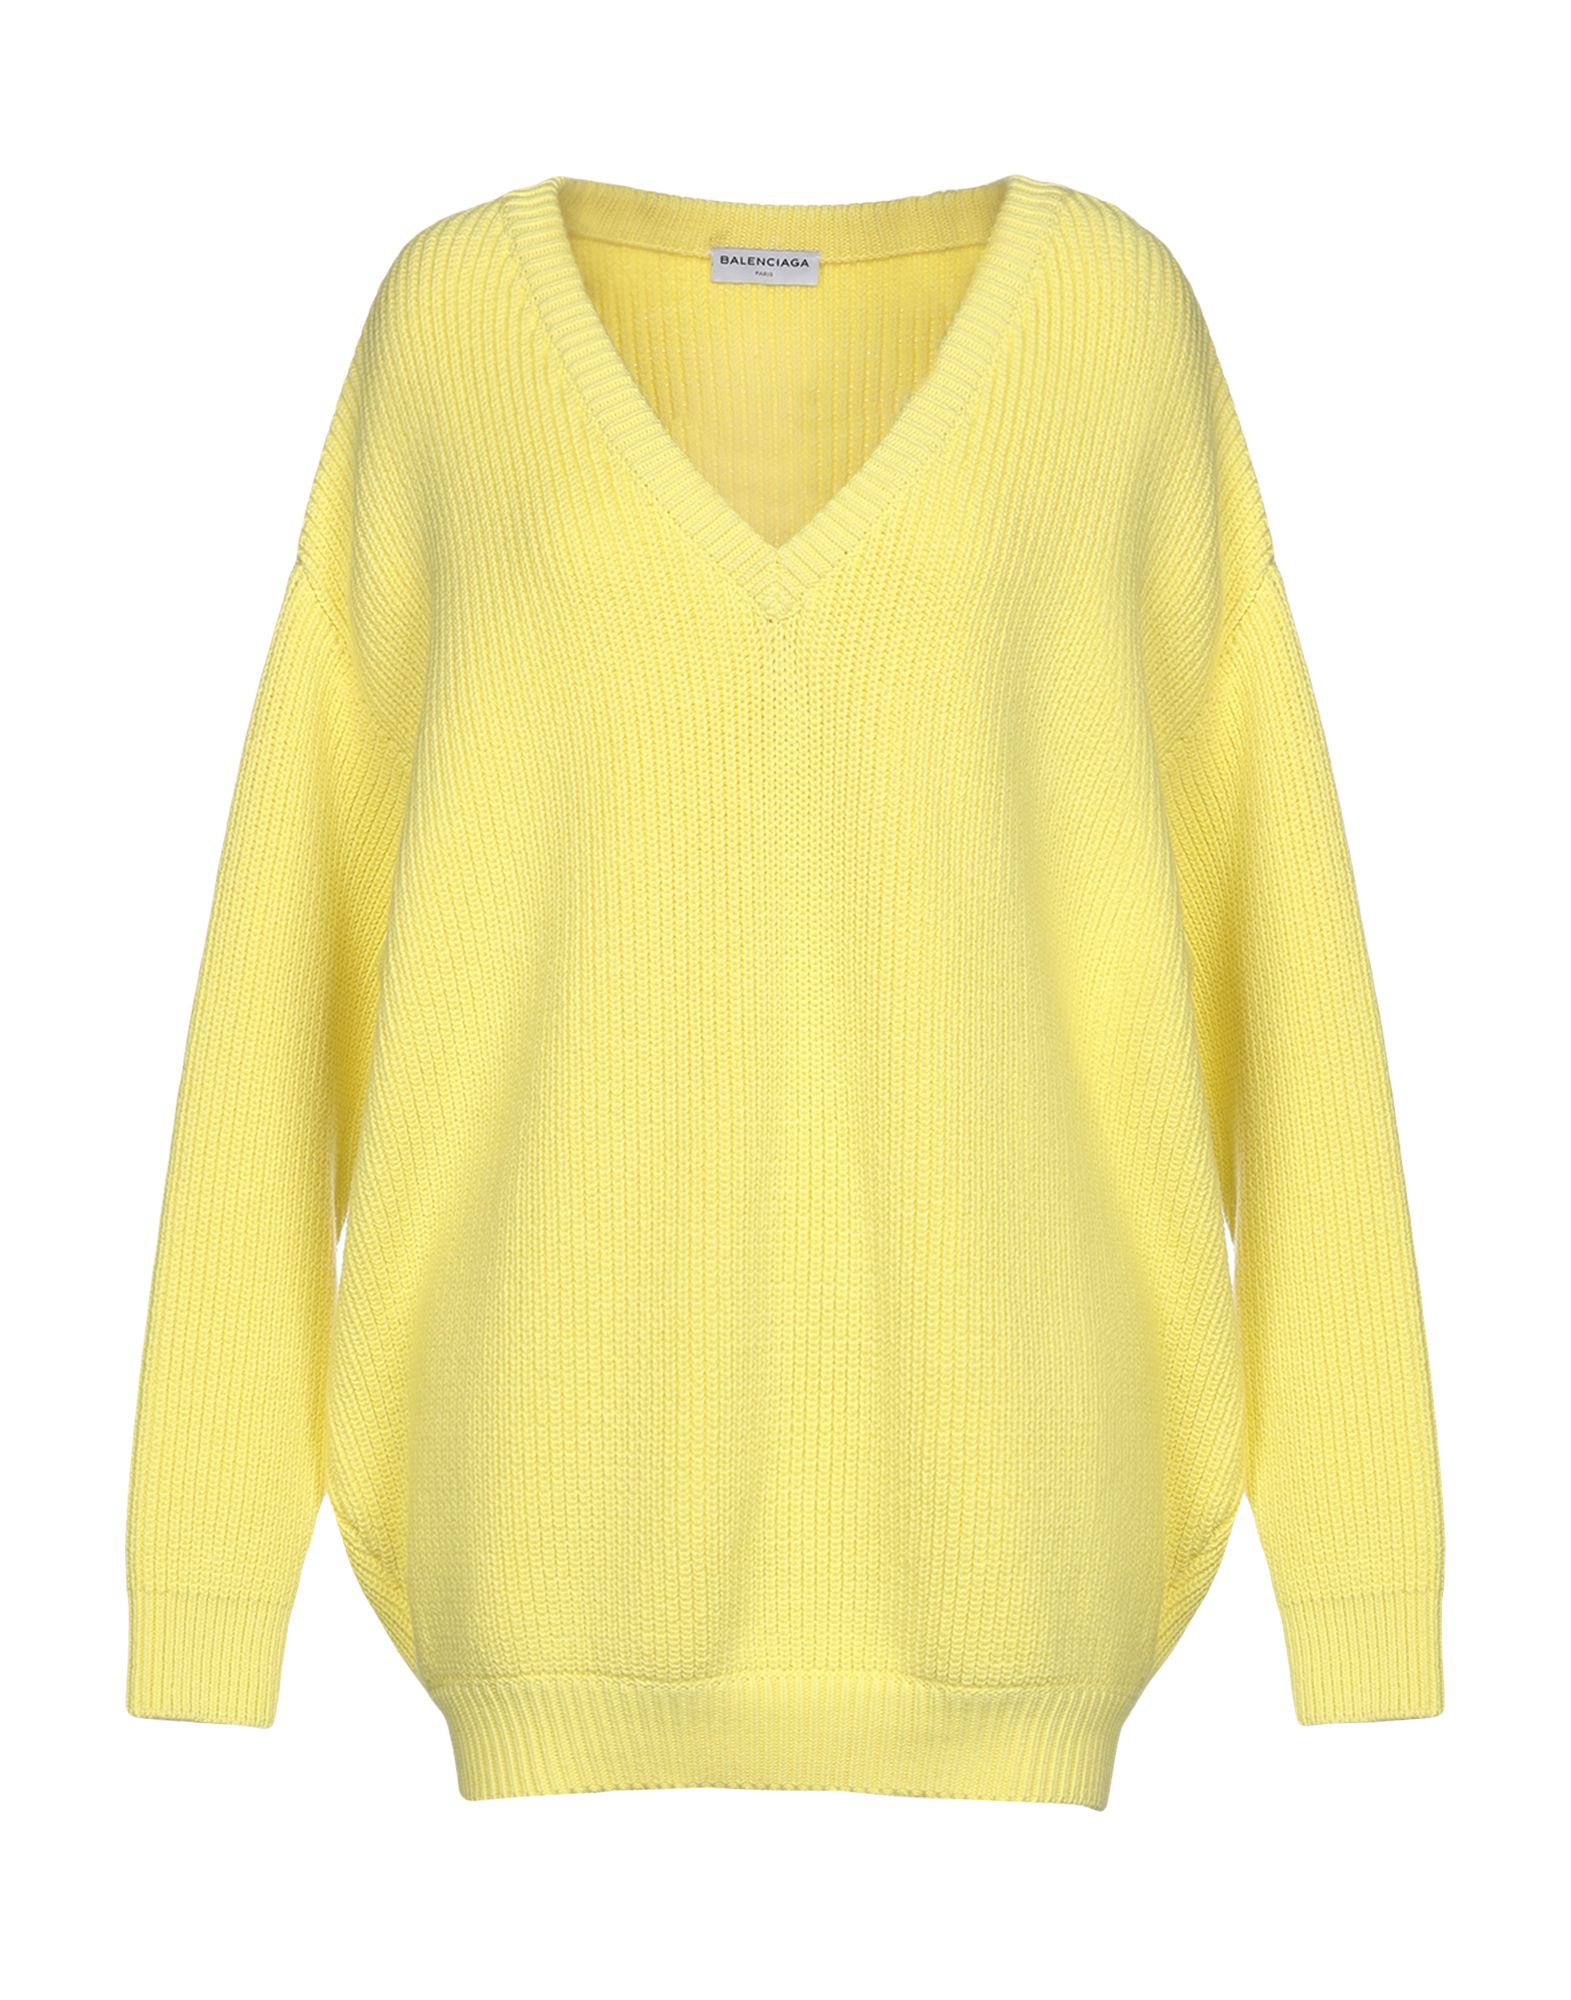 balenciaga sweater yellow